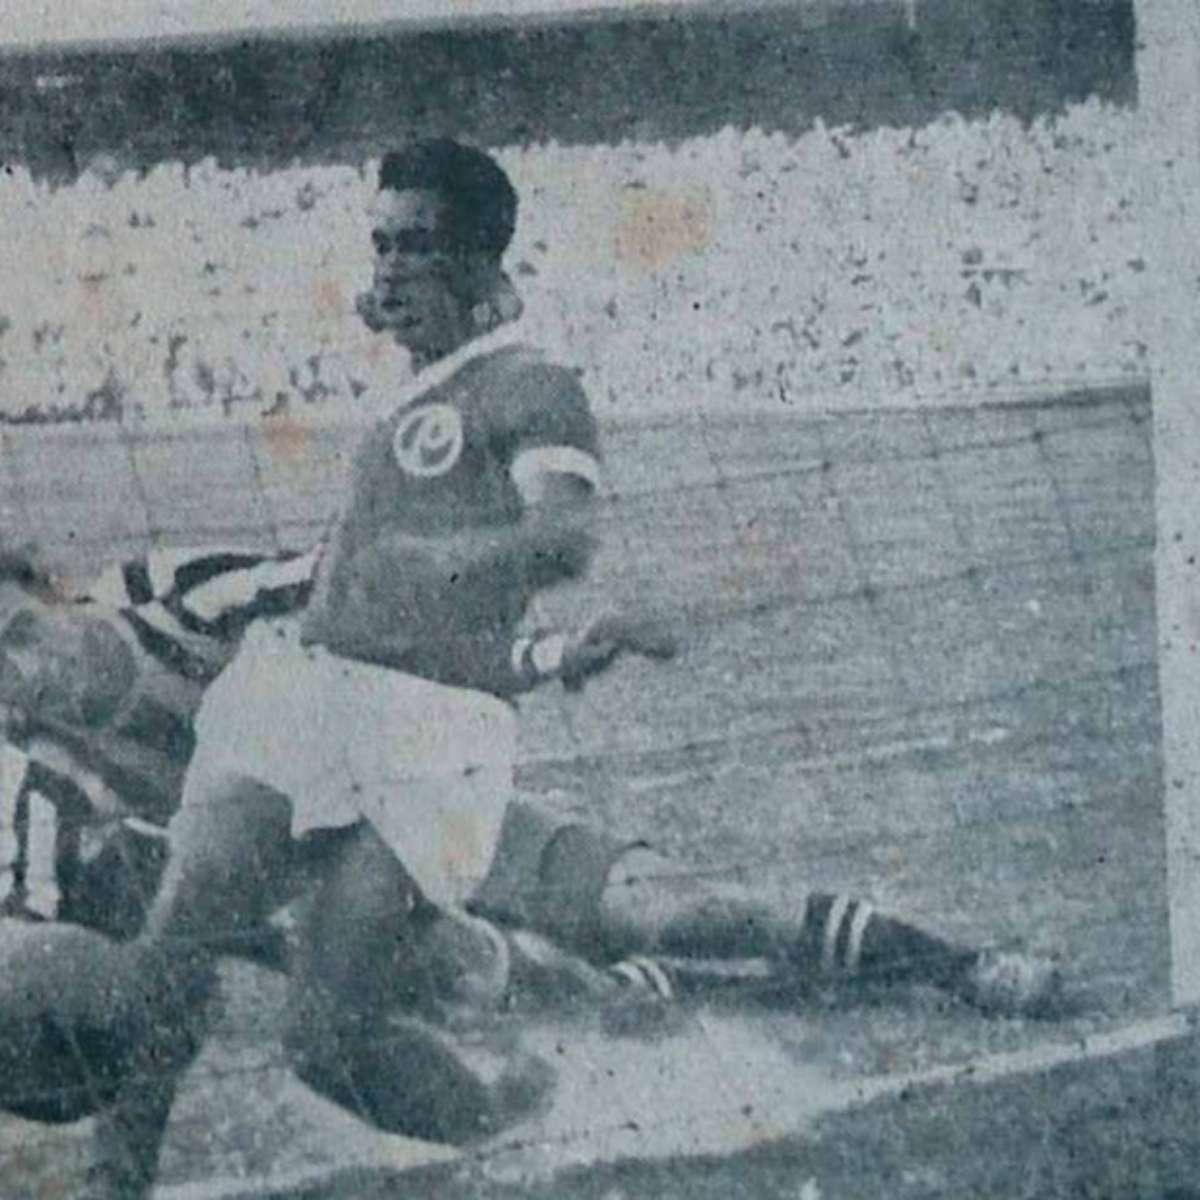 Palmeiras comemora 70 anos da conquista da Copa Rio de 1951